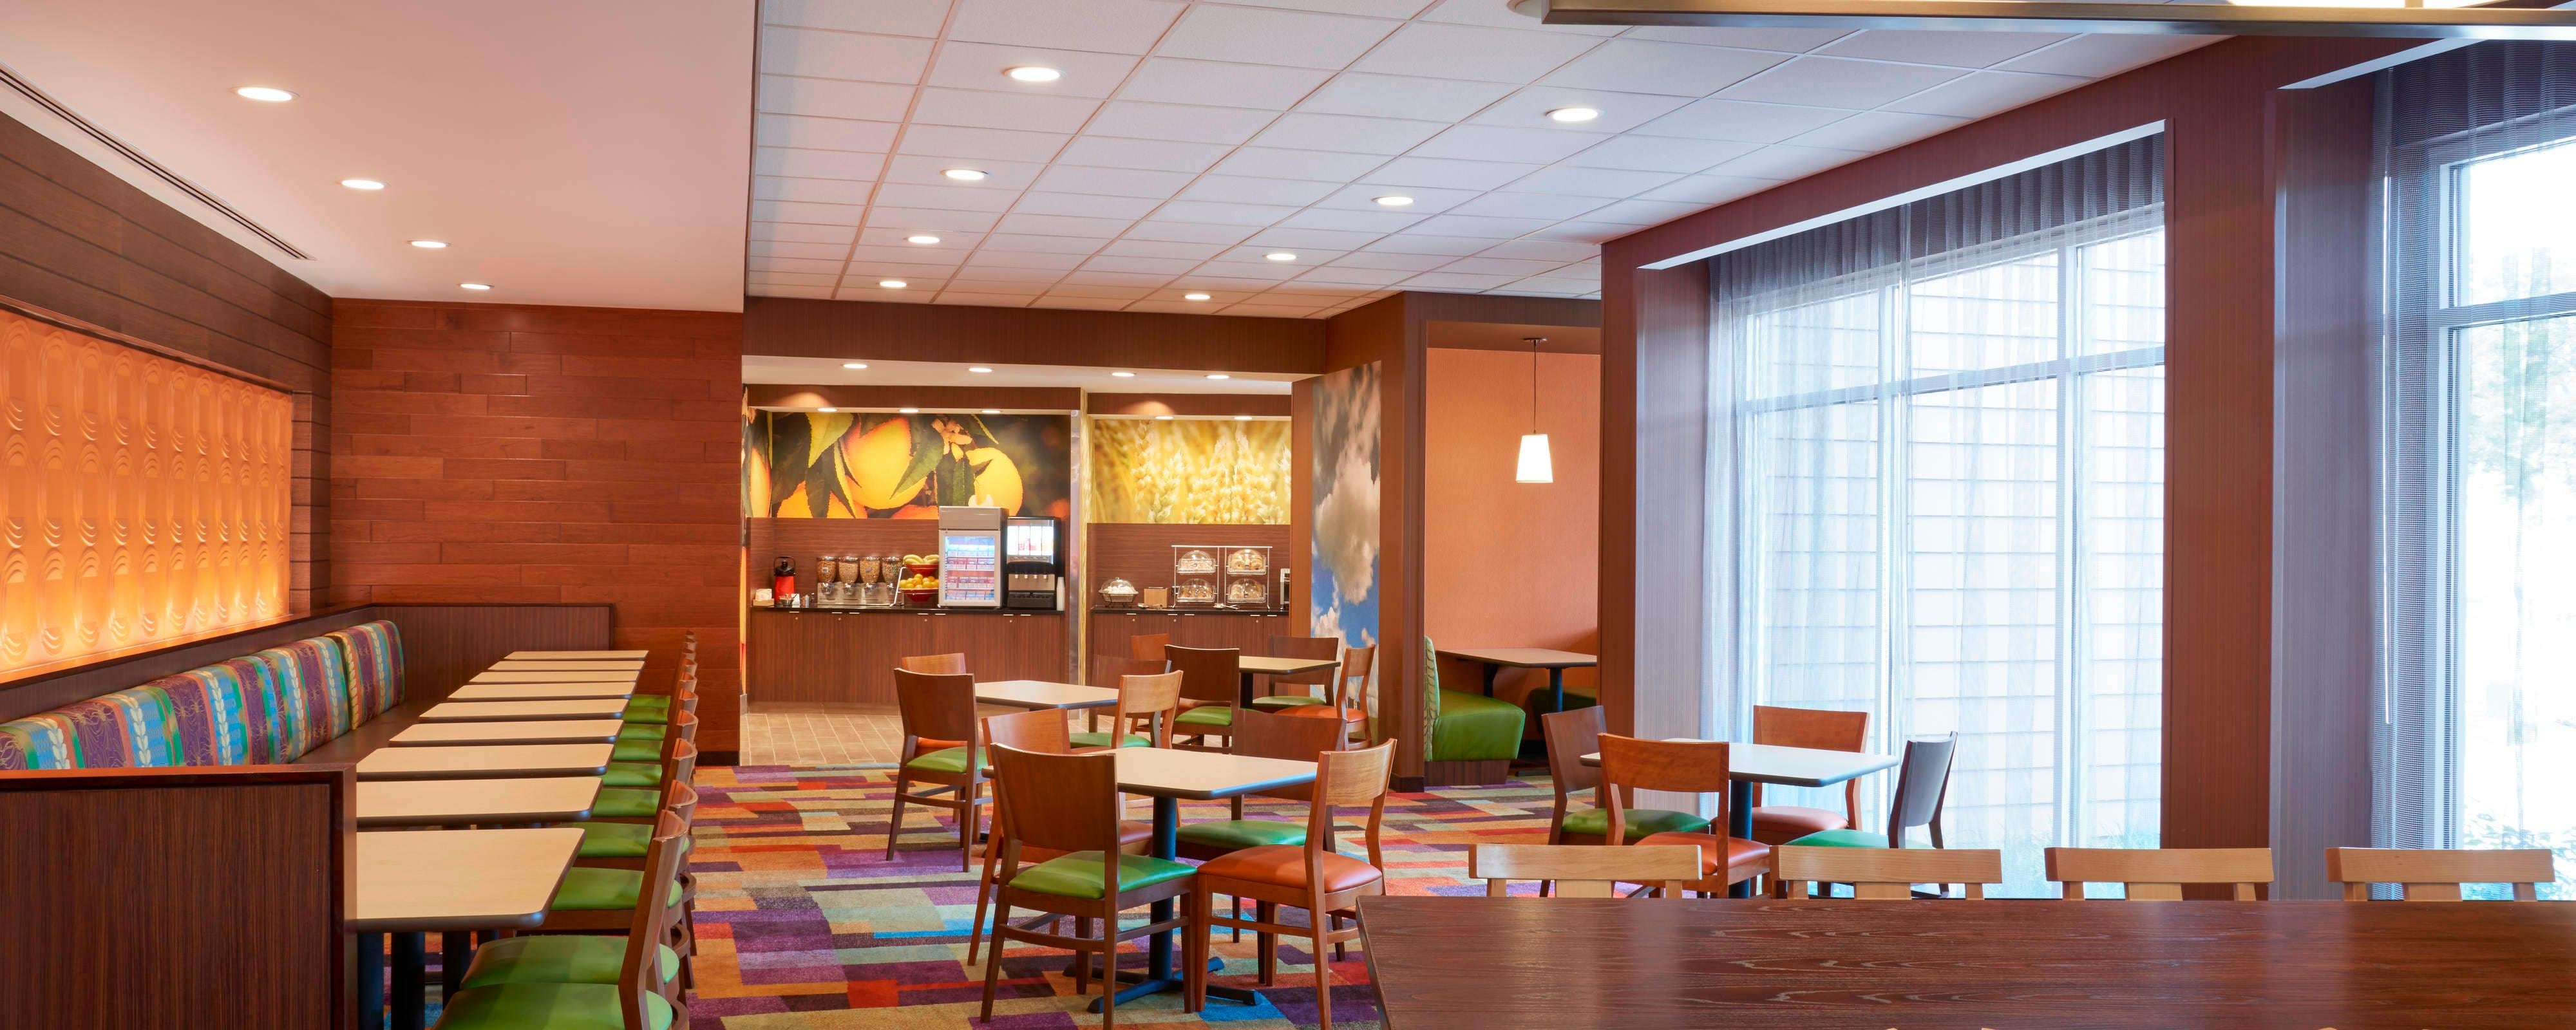 Niagara Falls Hotel with Free Breakfast Included Fairfield Inn